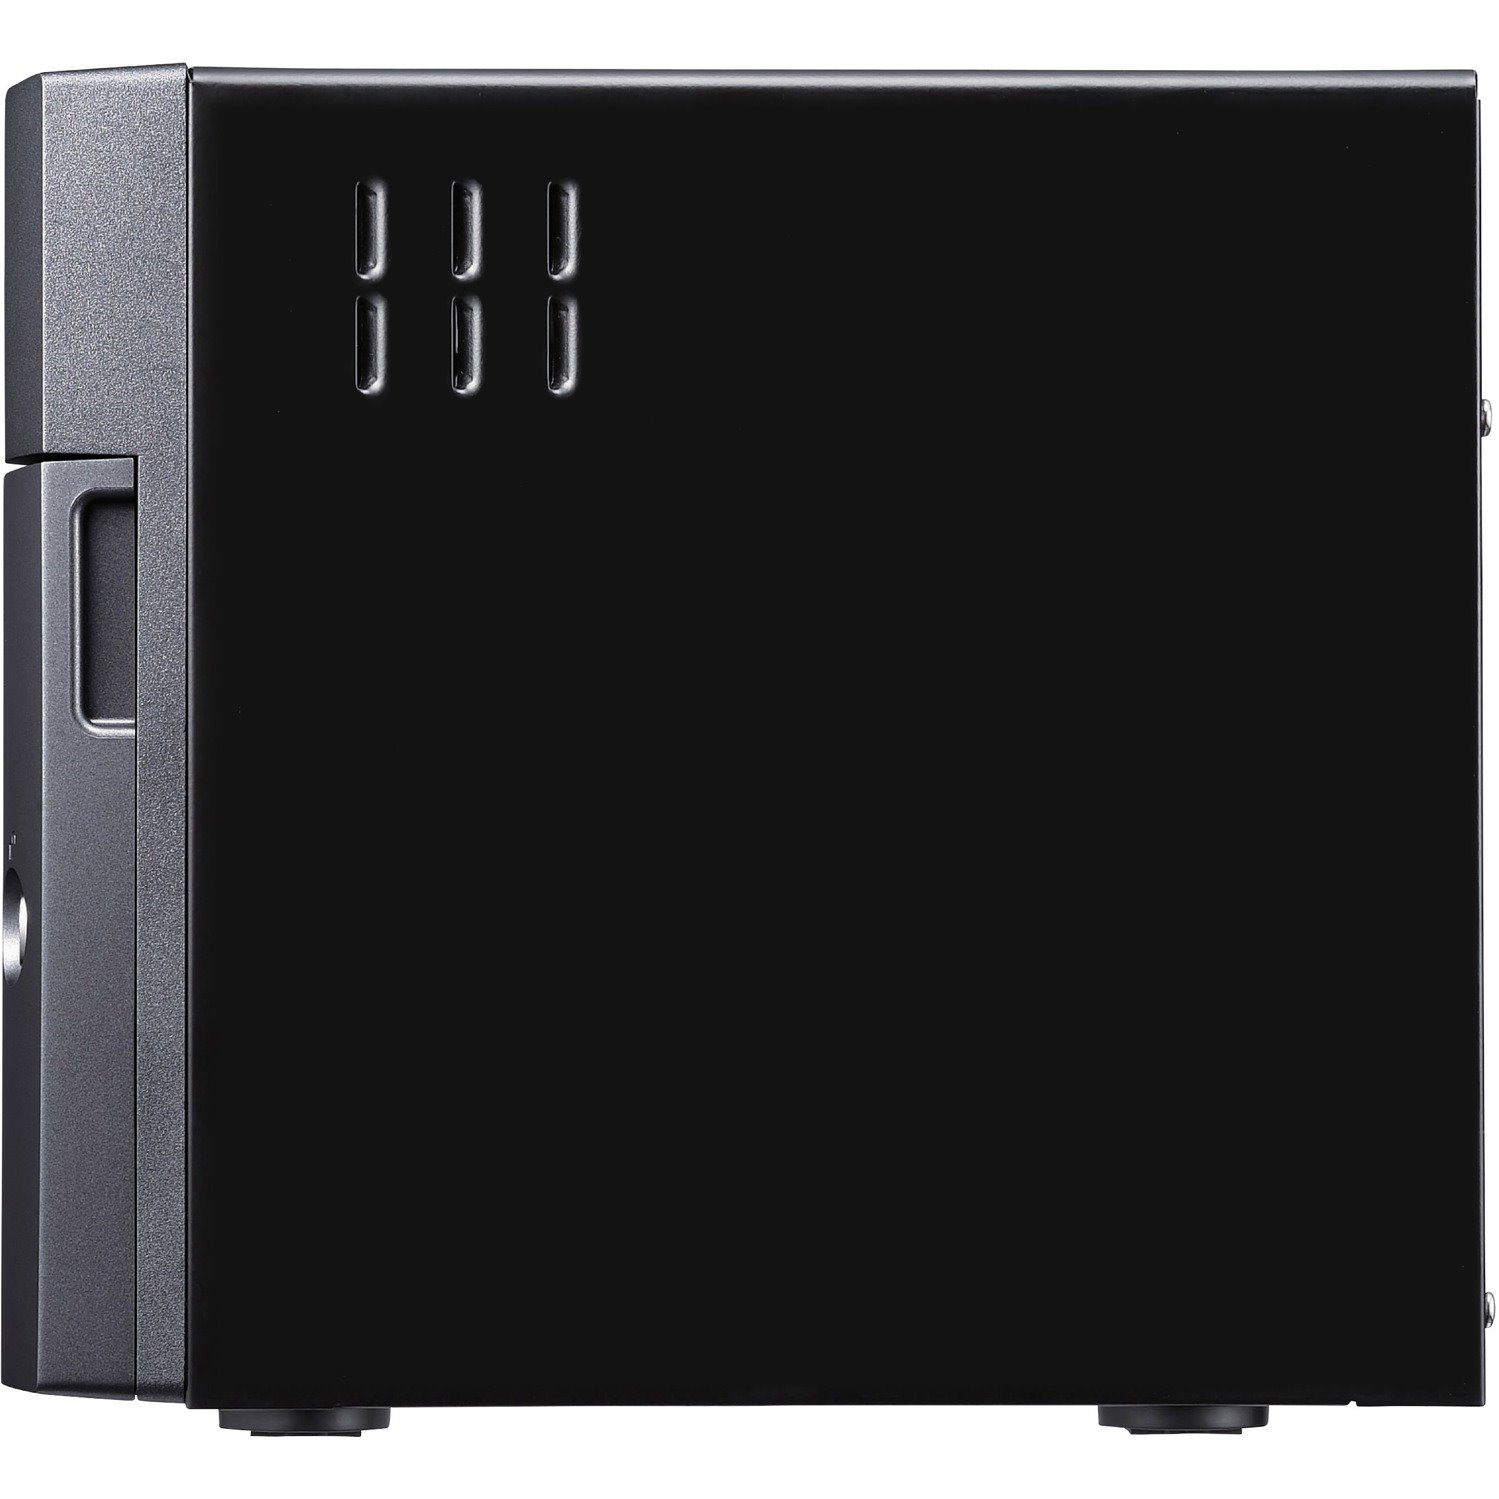 BUFFALO TeraStation 5420 4-Bay 32TB (2x16TB) Business Desktop NAS Storage Hard Drives Included